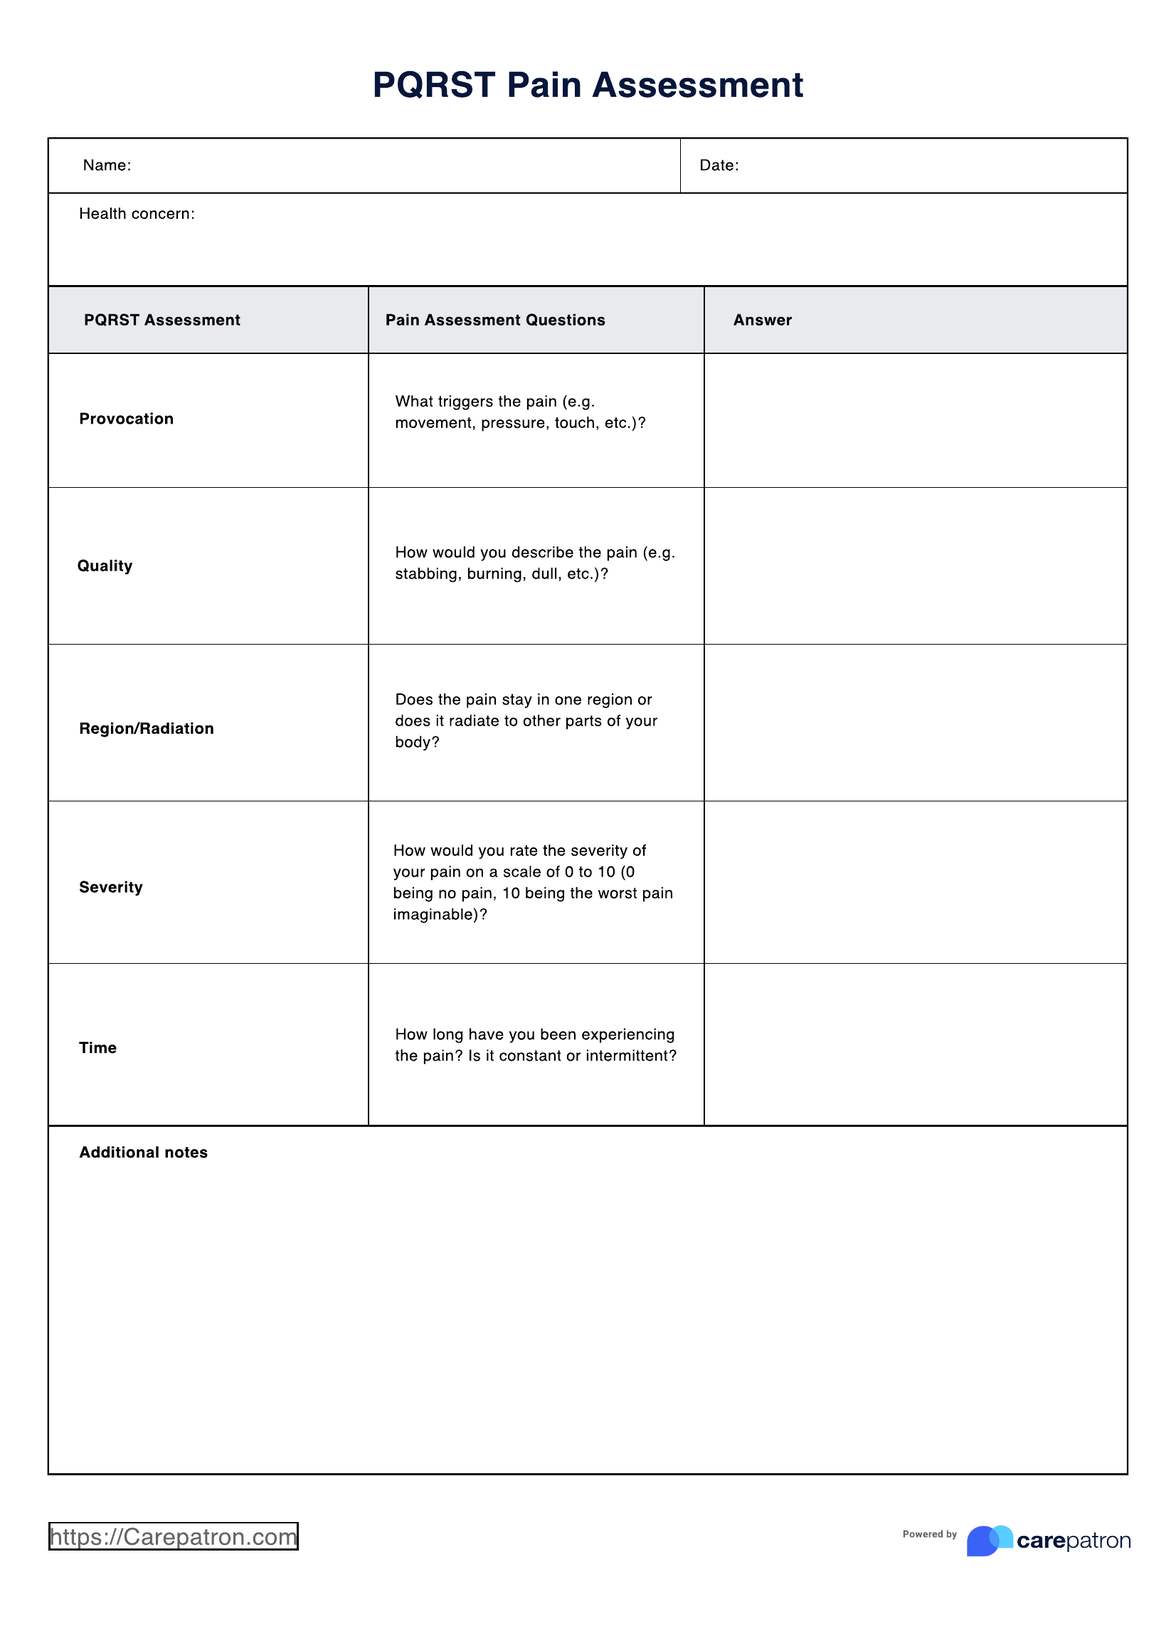 PQRST Pain Assessment PDF Example